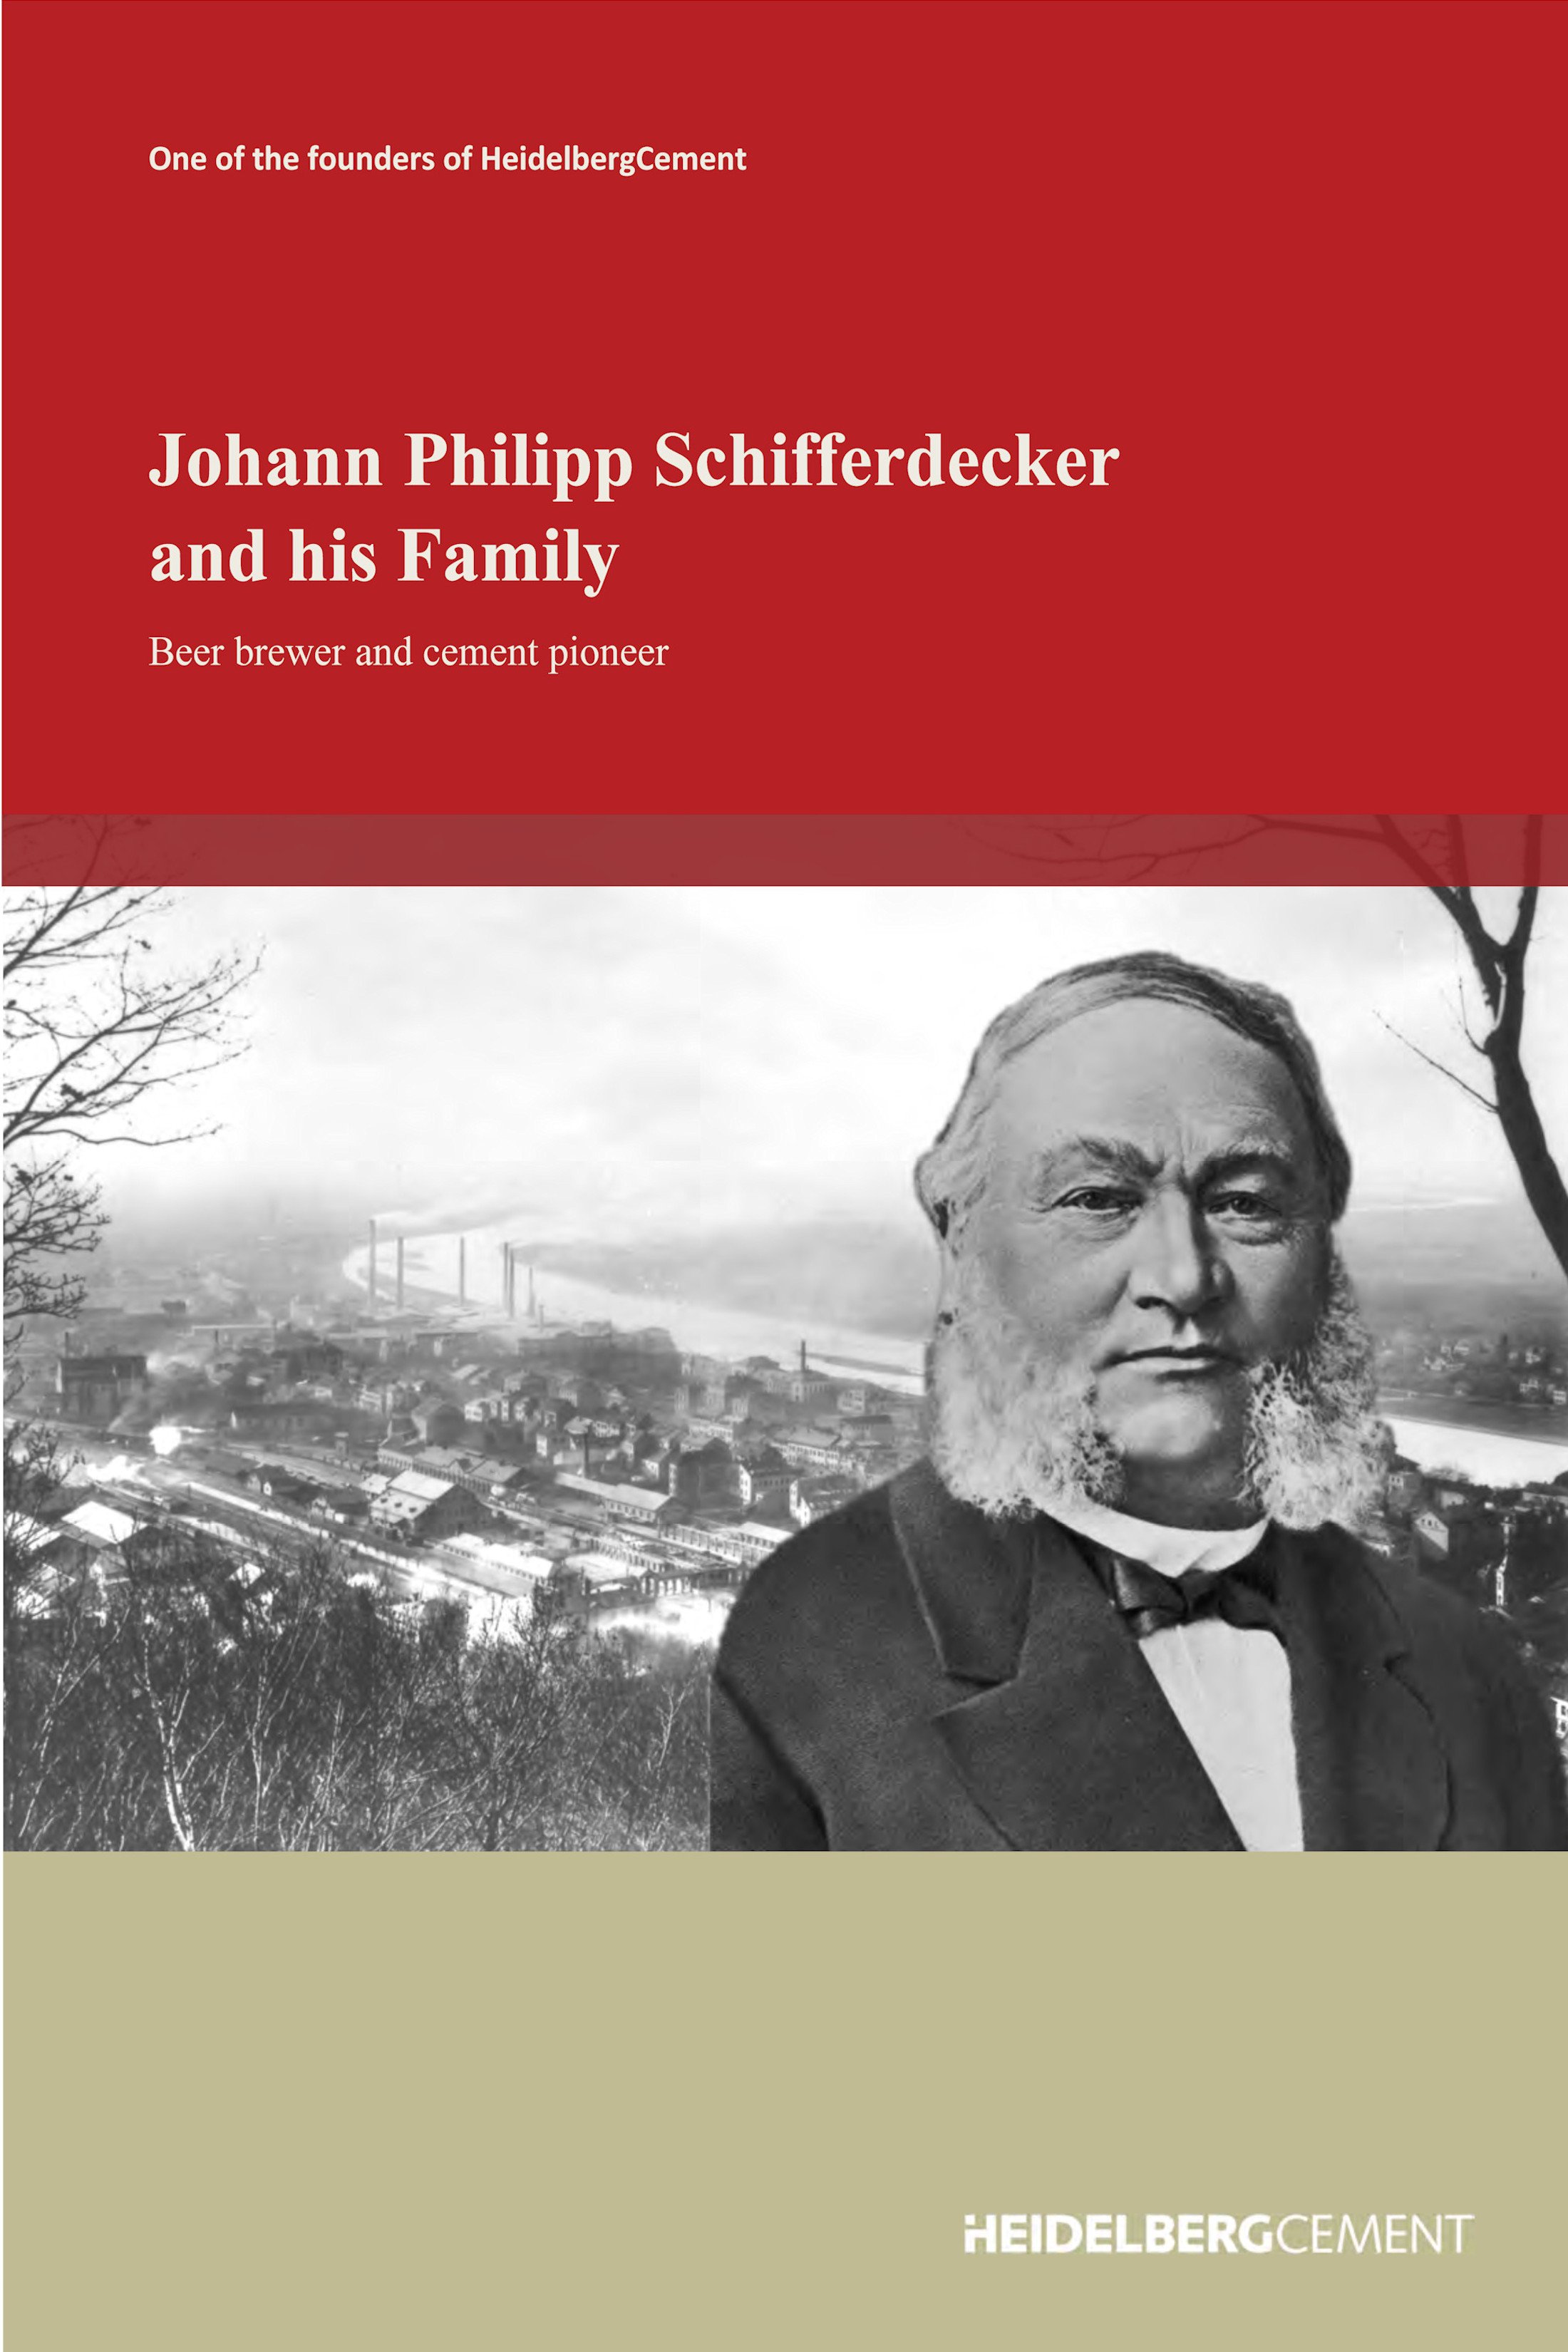 A picture of Johann Schifferdecker